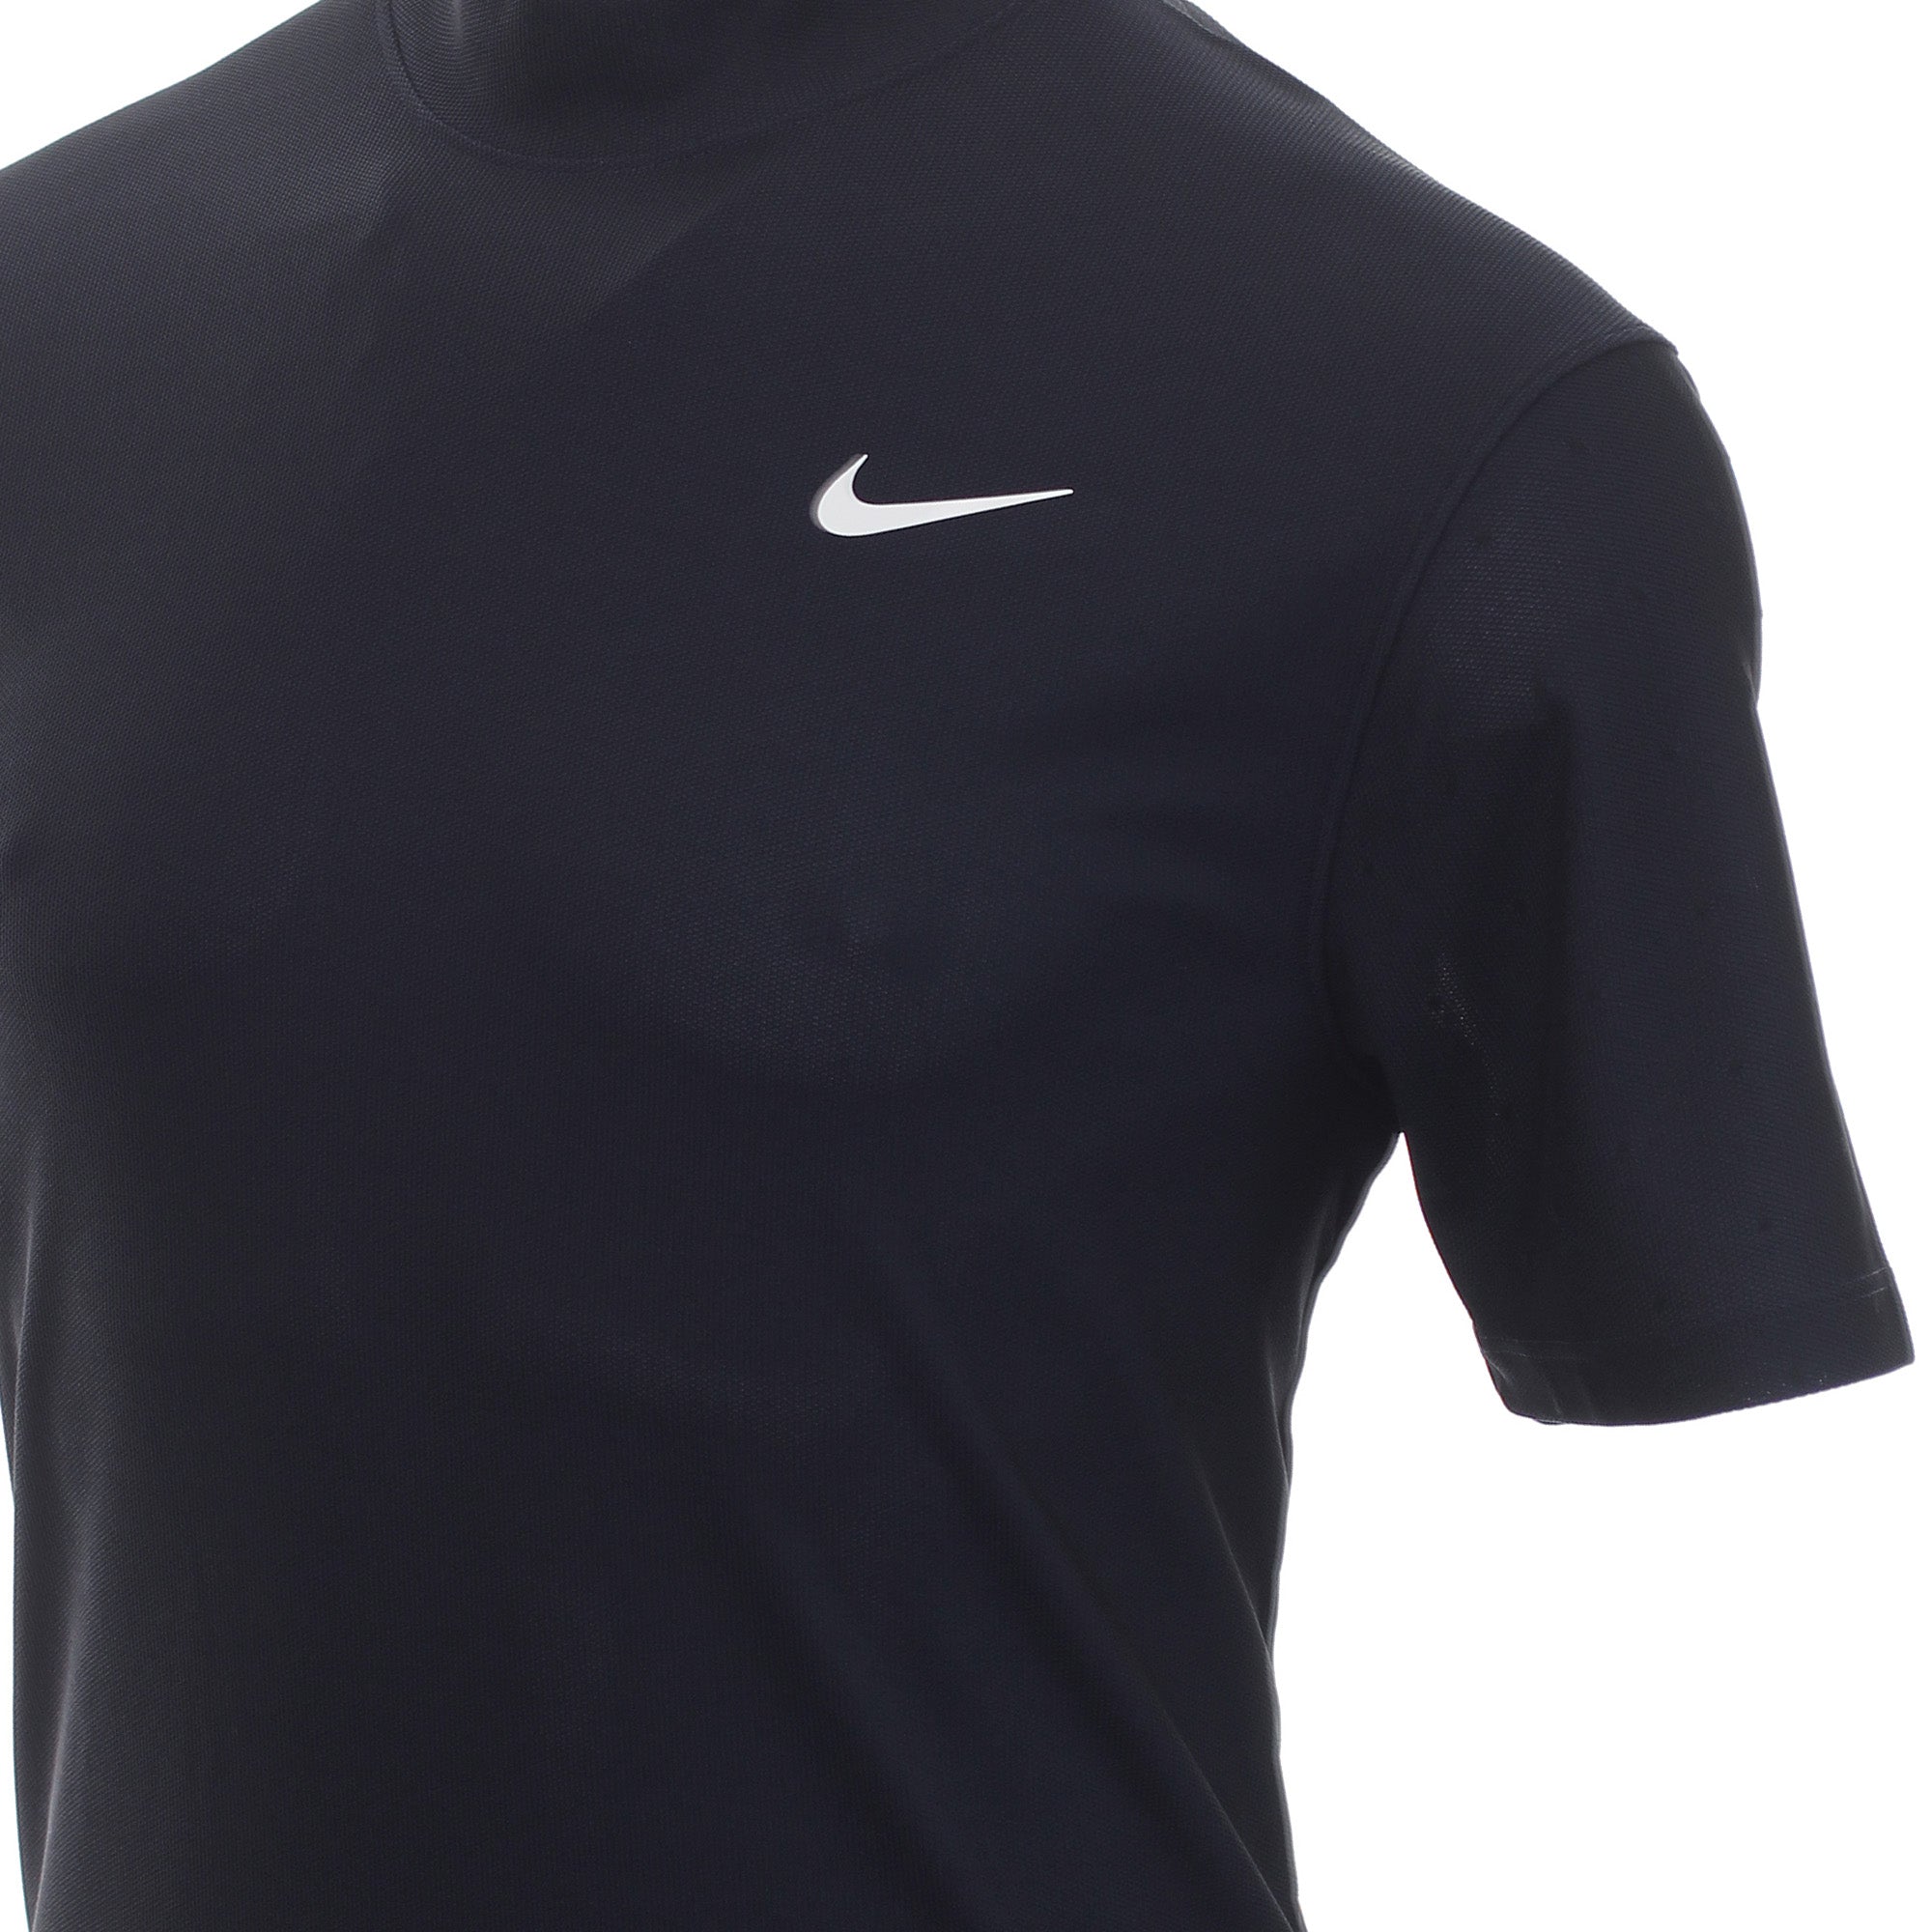 Nike Golf TW Dry Mock Shirt CT6078 Obsidian 451 | Function18